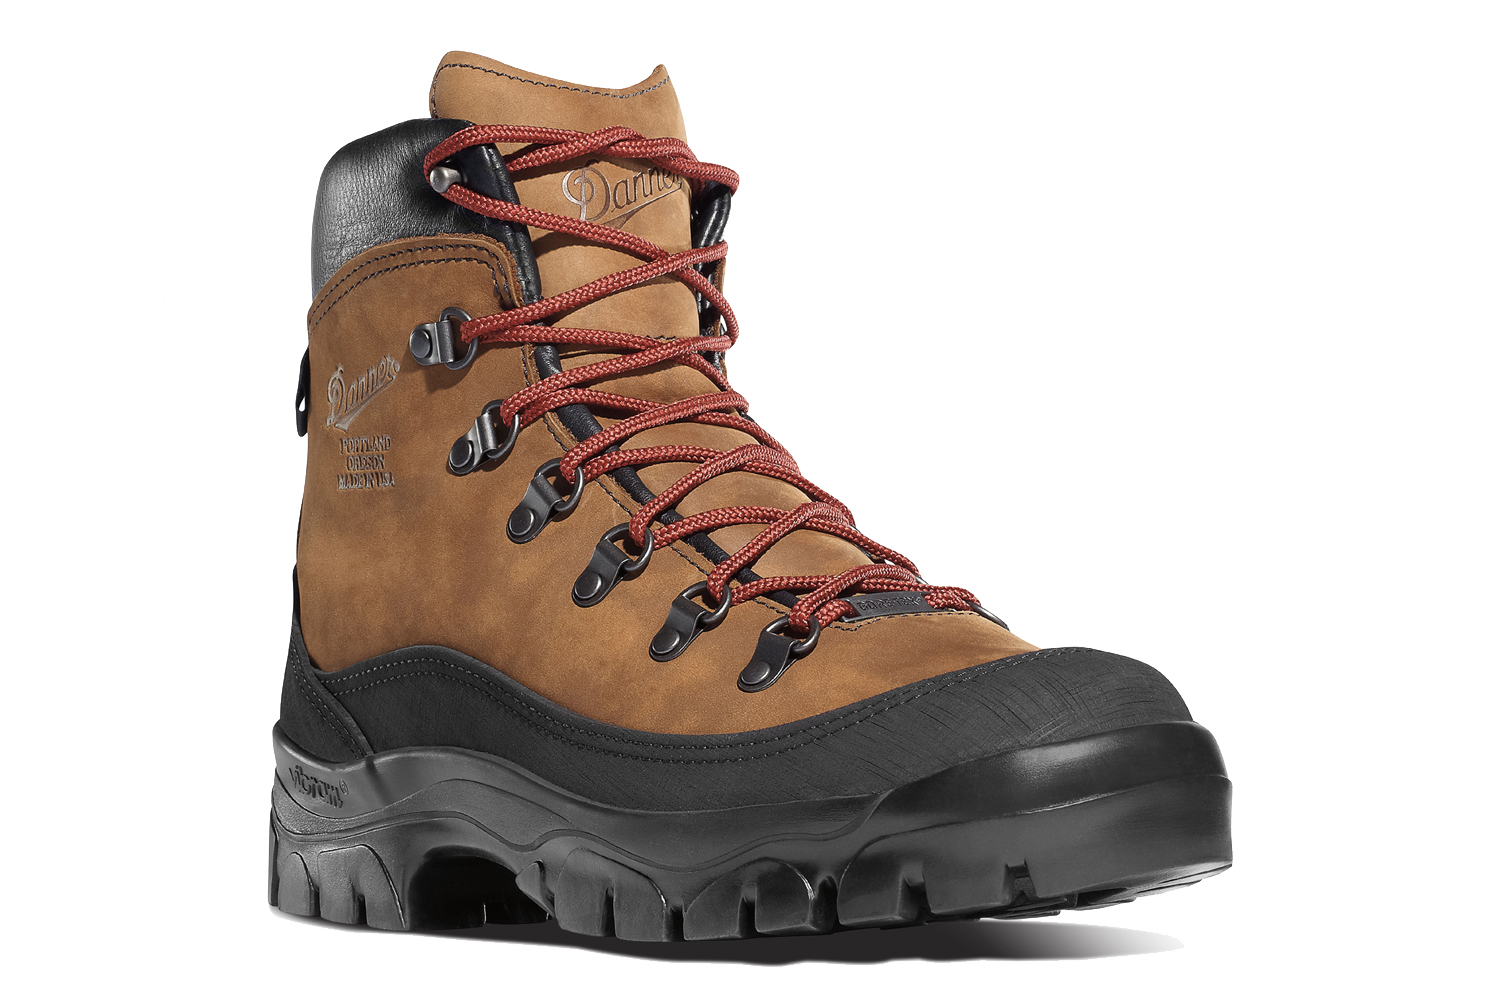 fjallraven hiking boots